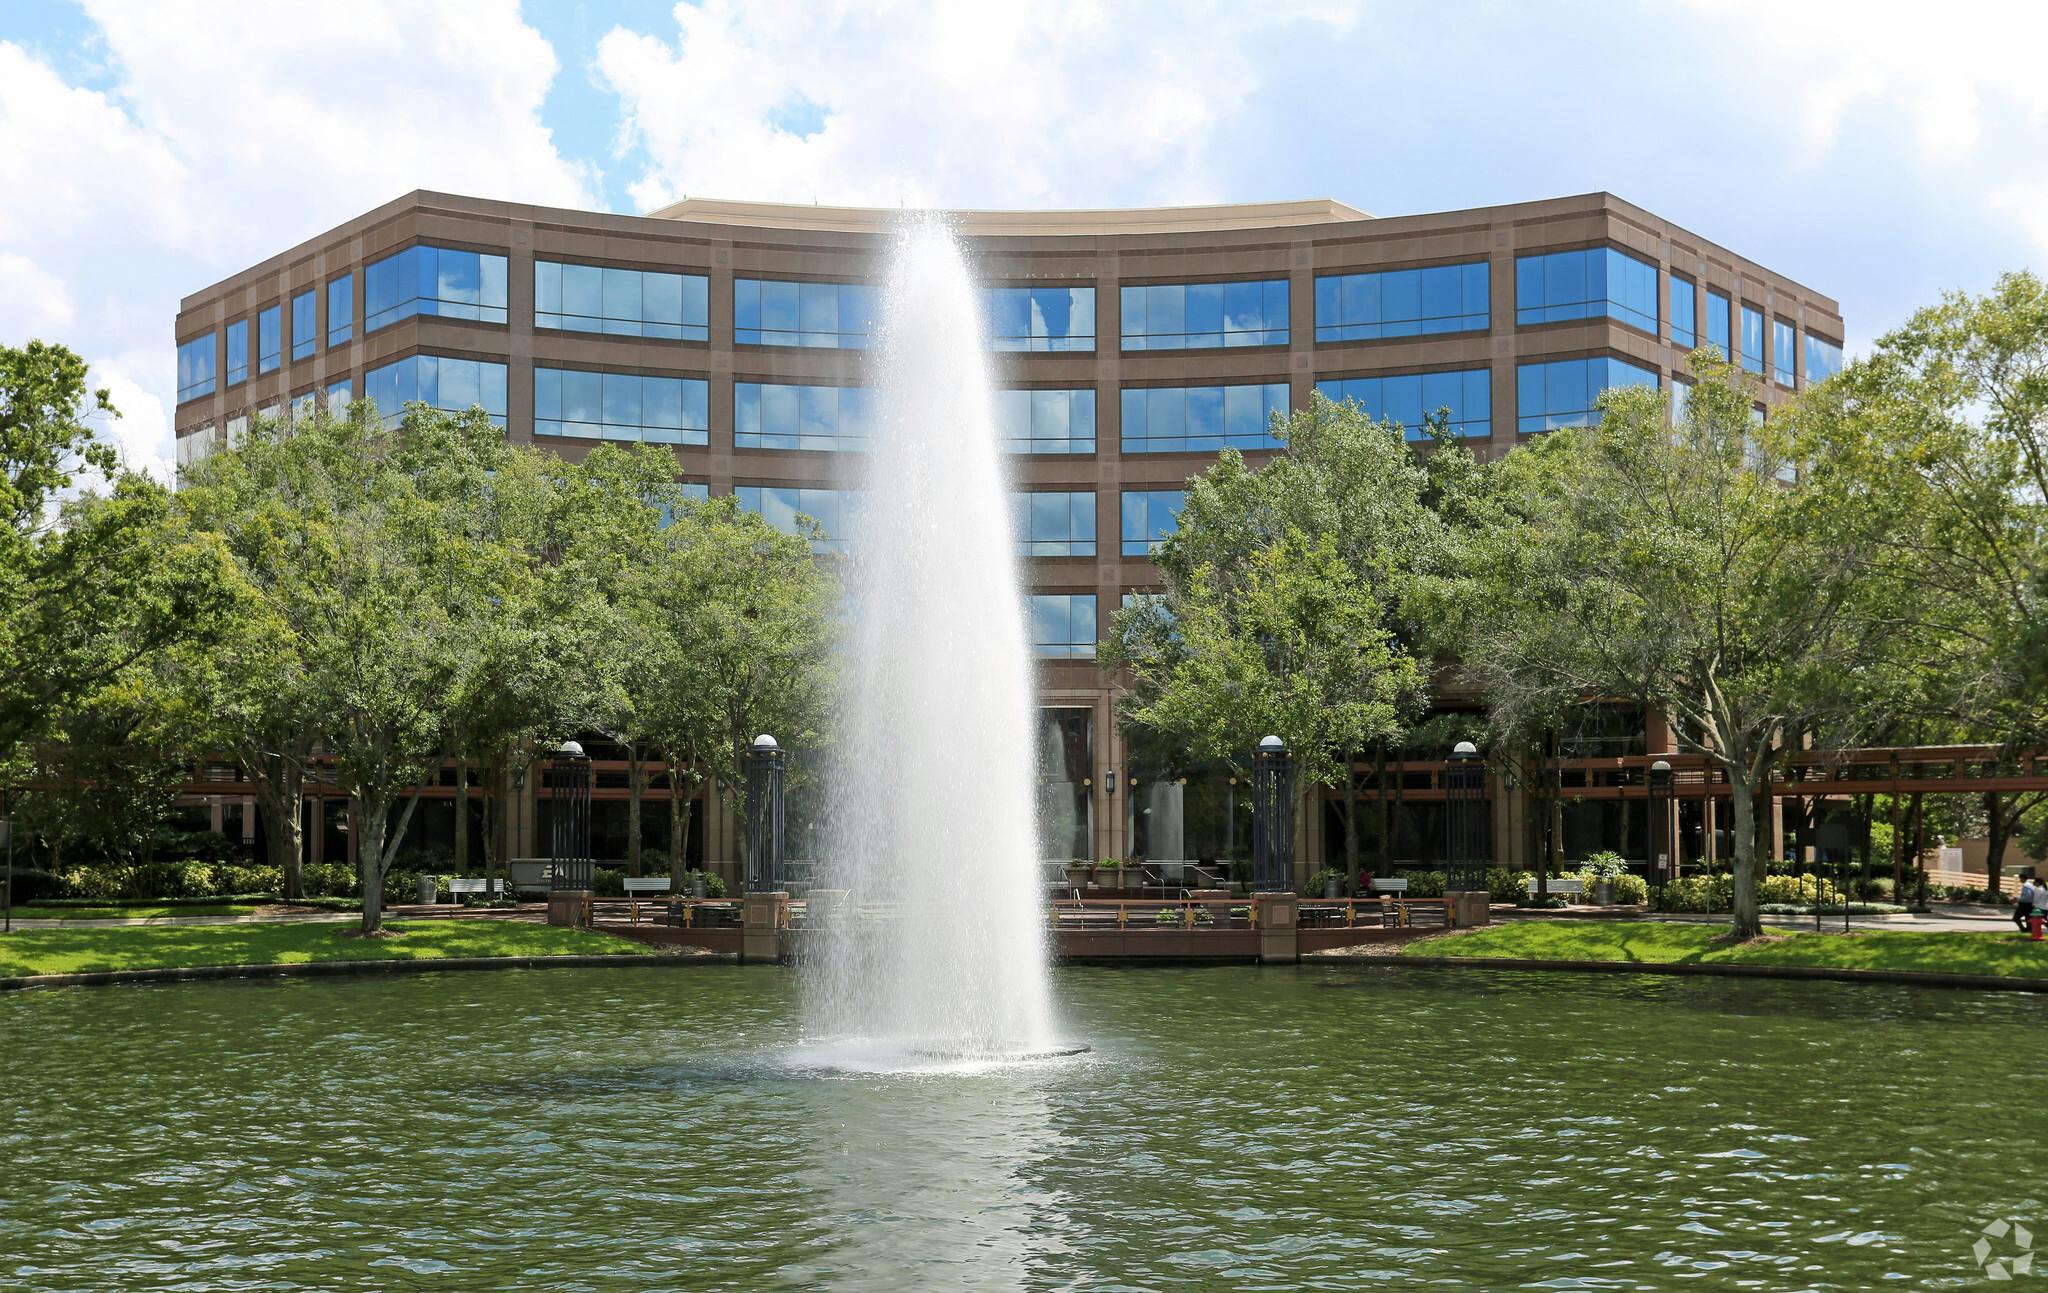 High tech research & development office space in Orlando, FL